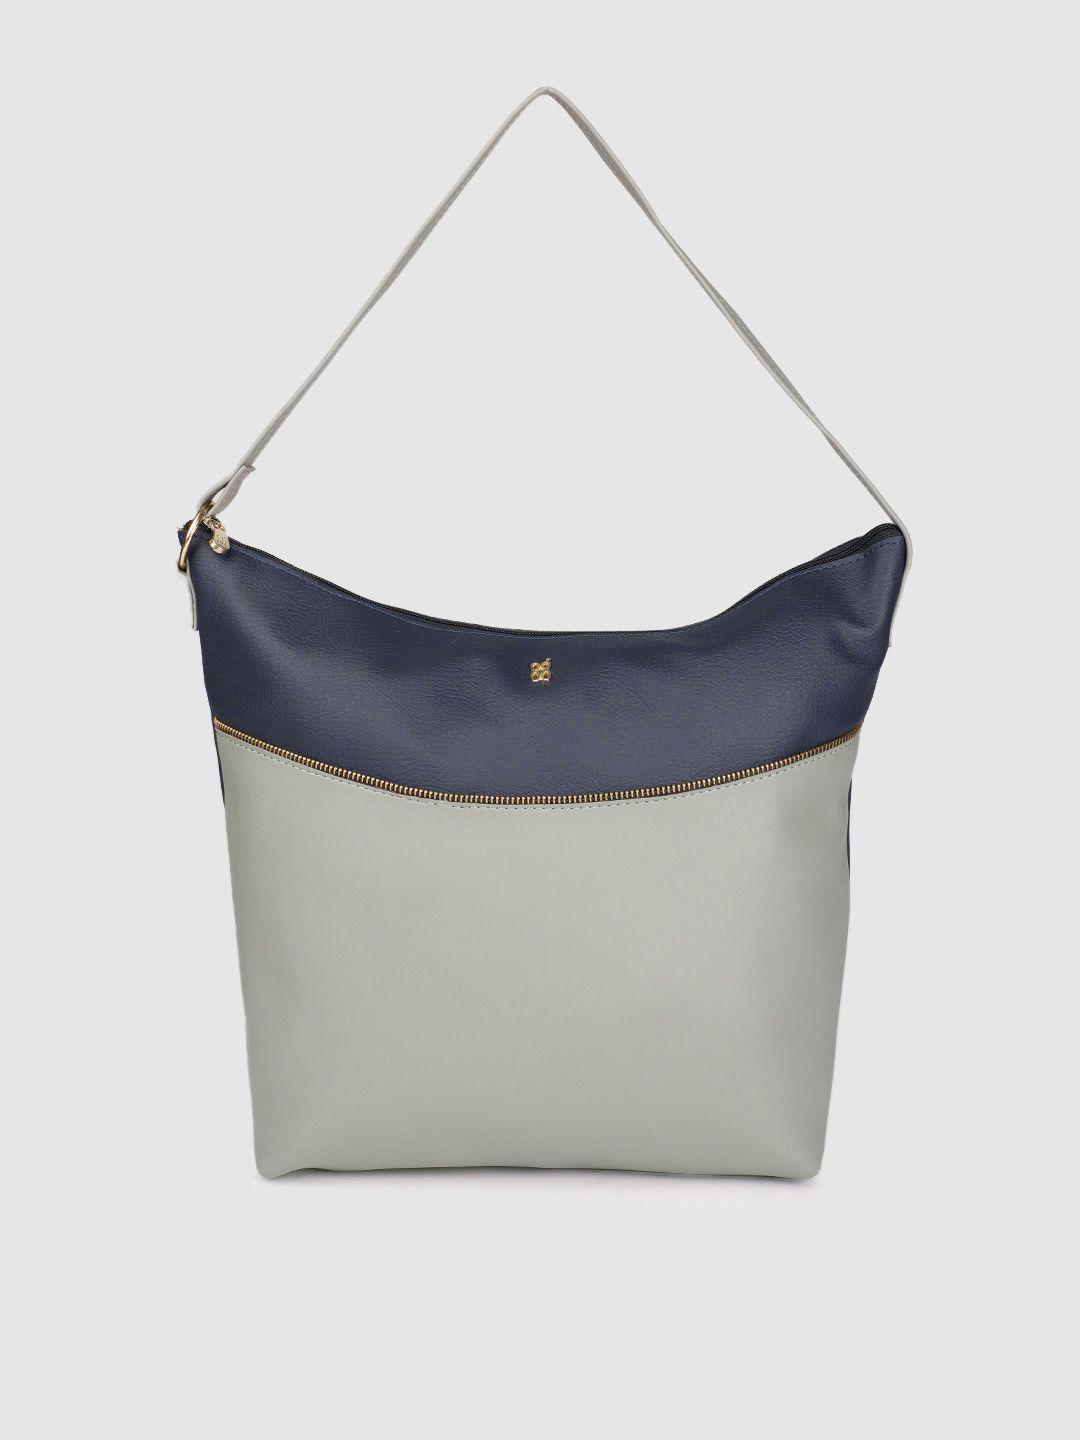 baggit navy blue & grey colourblocked hobo bag